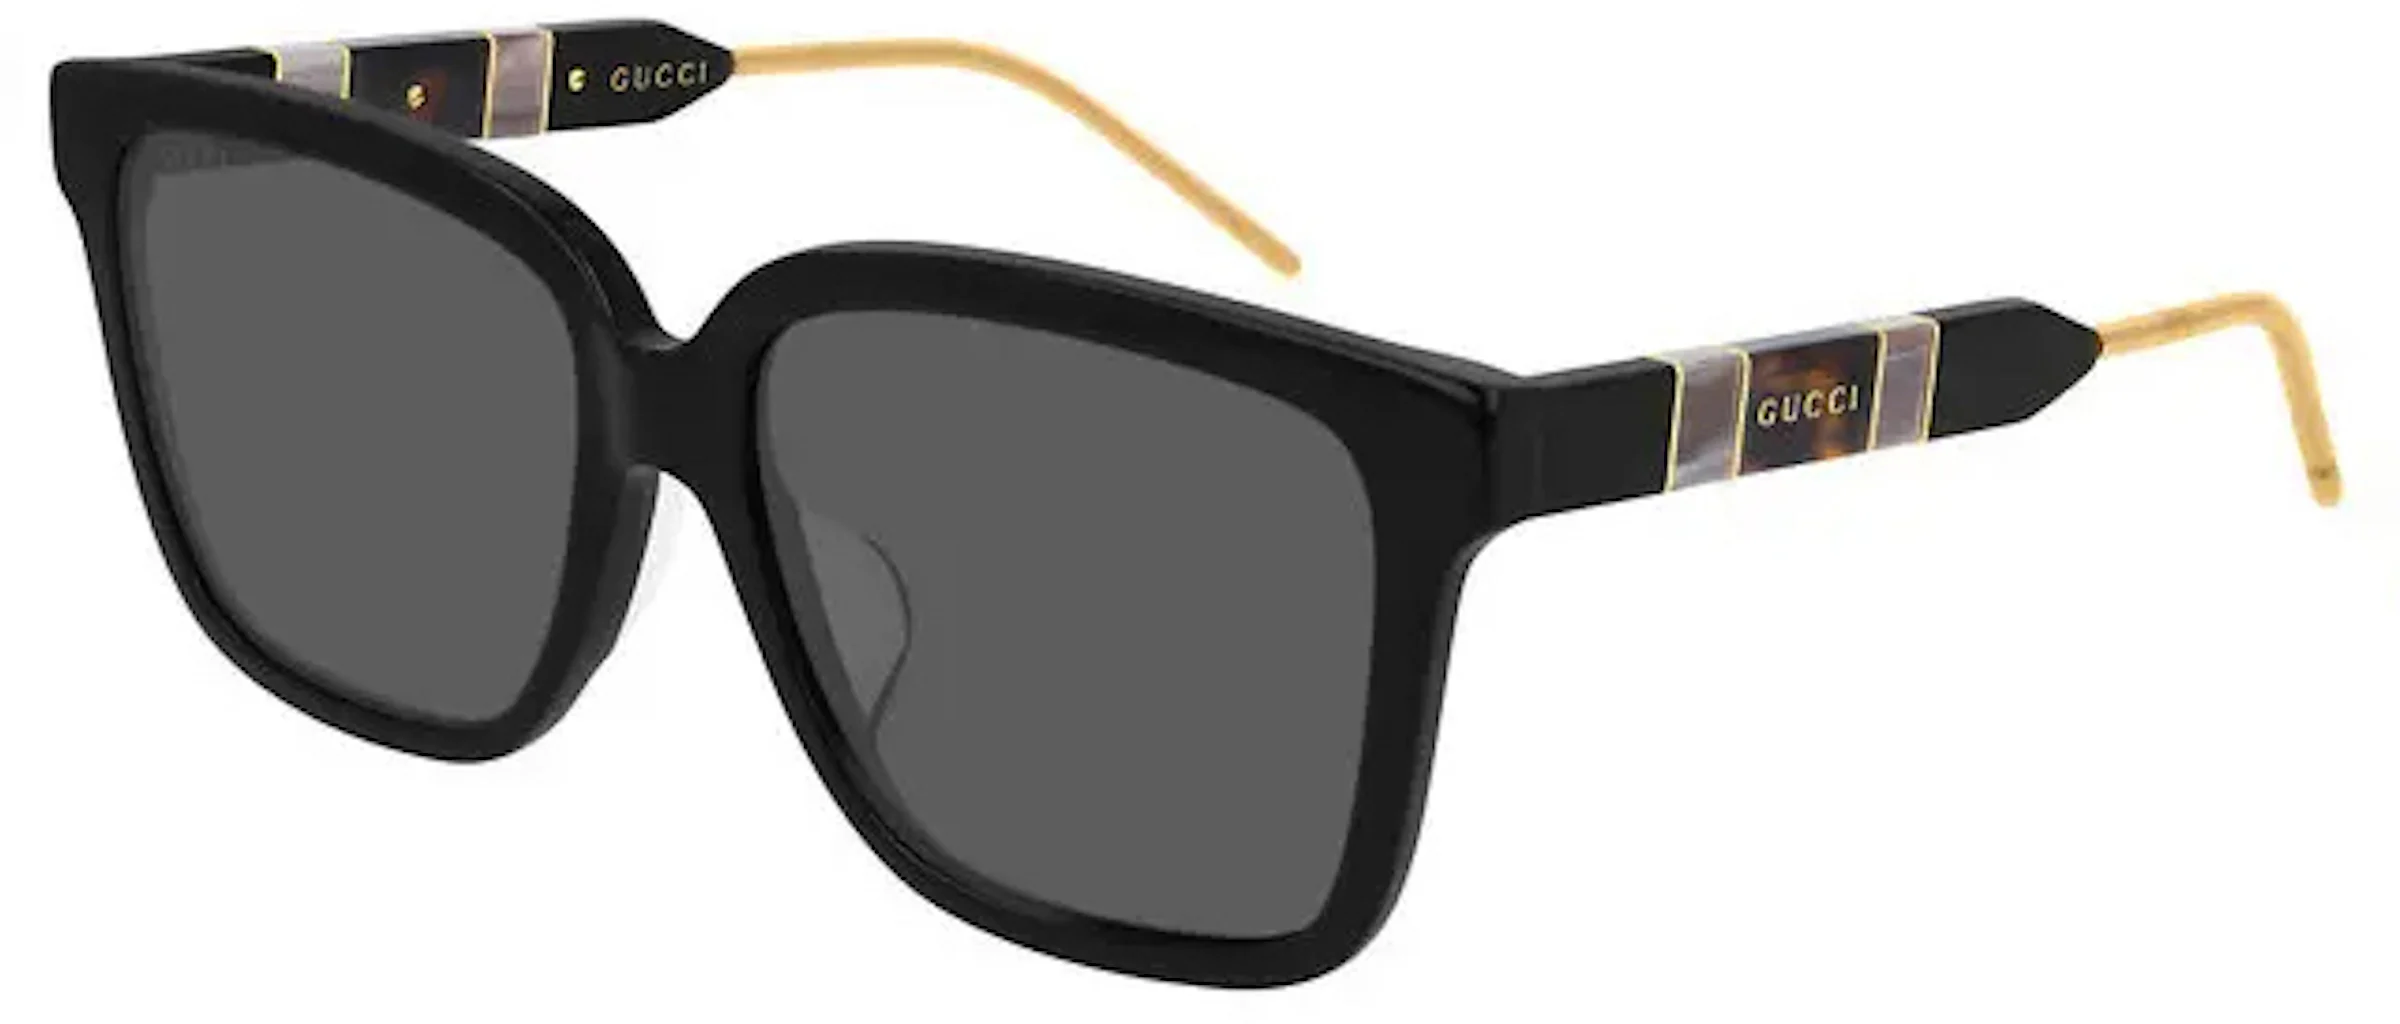 Gucci Square Sunglasses Black (GG0599SA 001) in Gold Metal/Acetate with ...